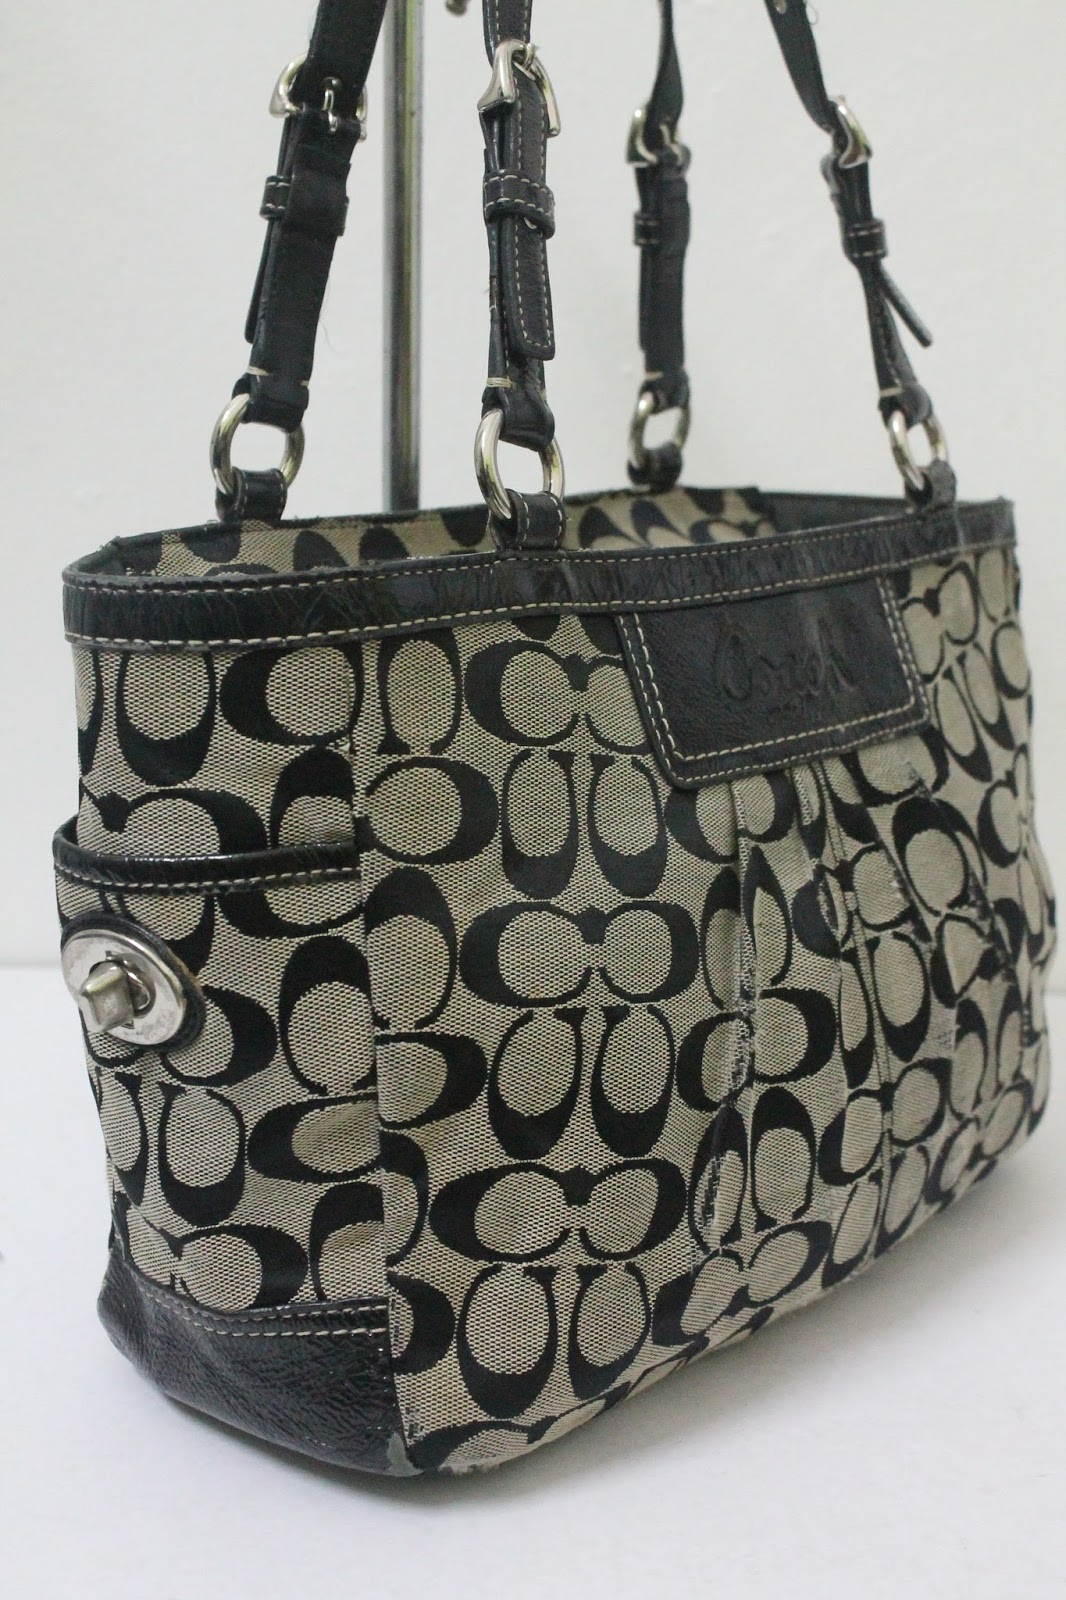 BUNDLEBARANGBAEK: Authentic COACH Signature Pleated Black Handbag.